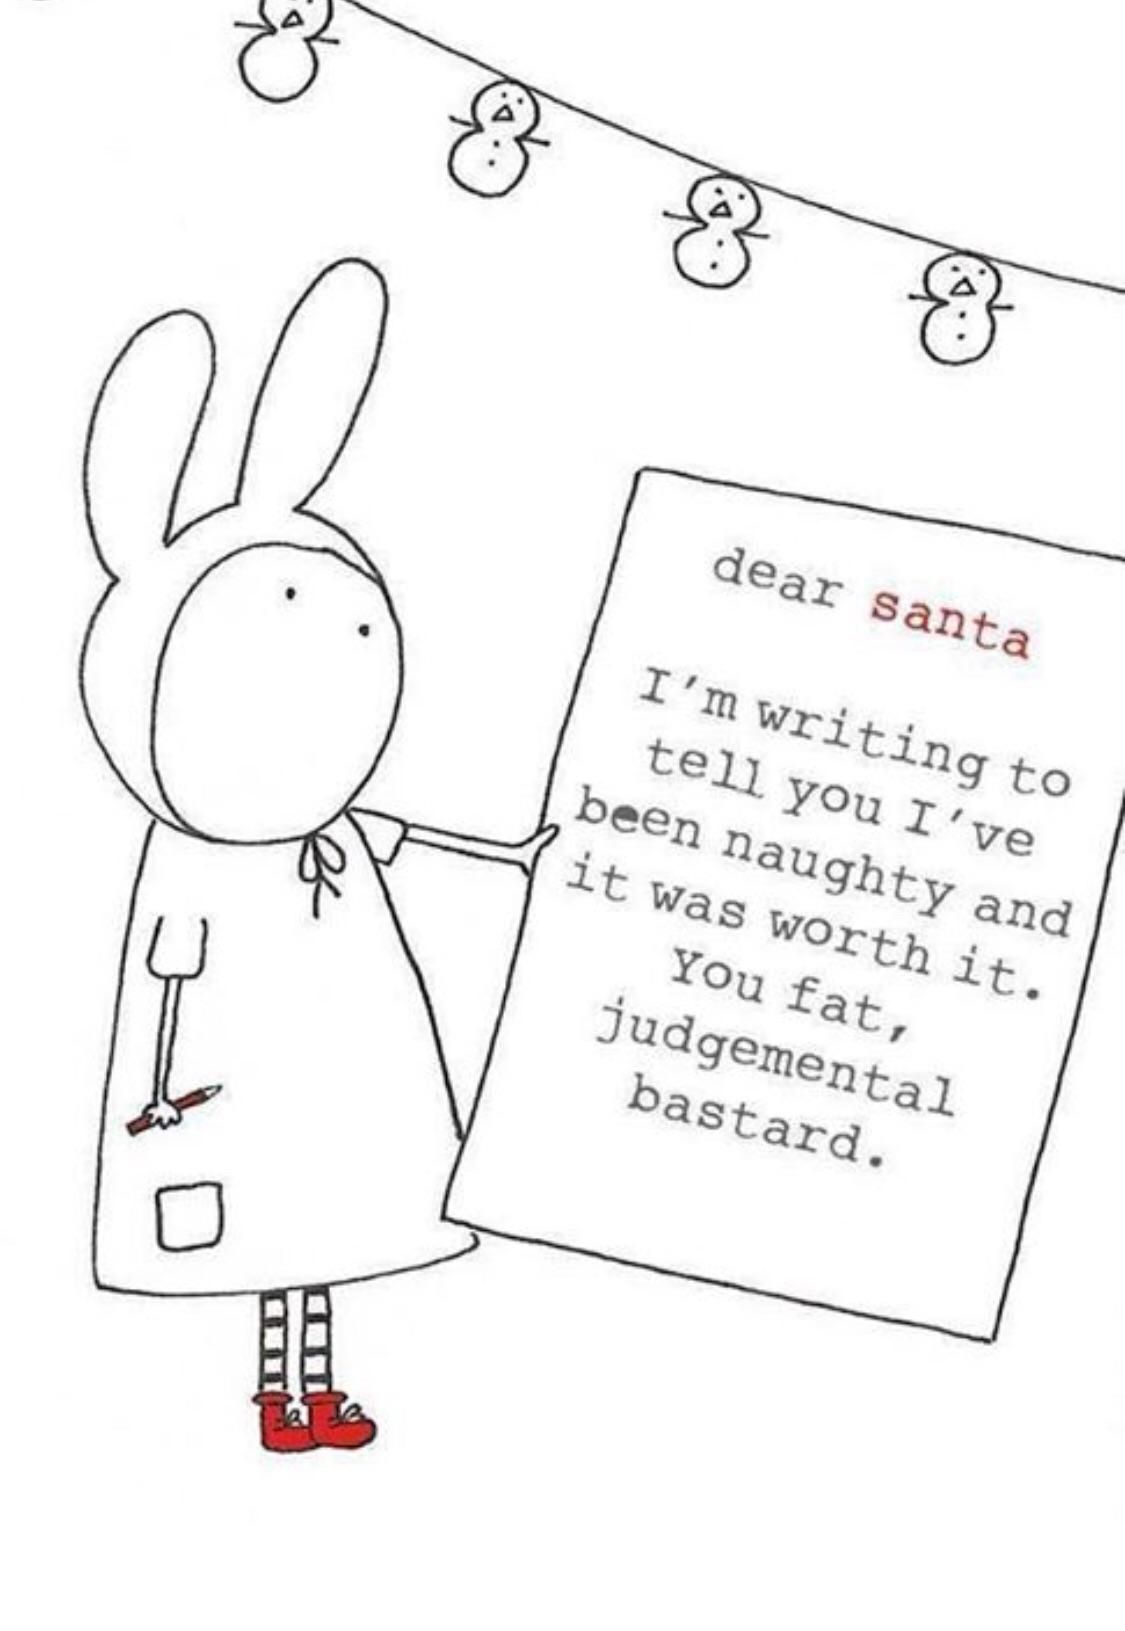 Dear Santa... it was worth it...